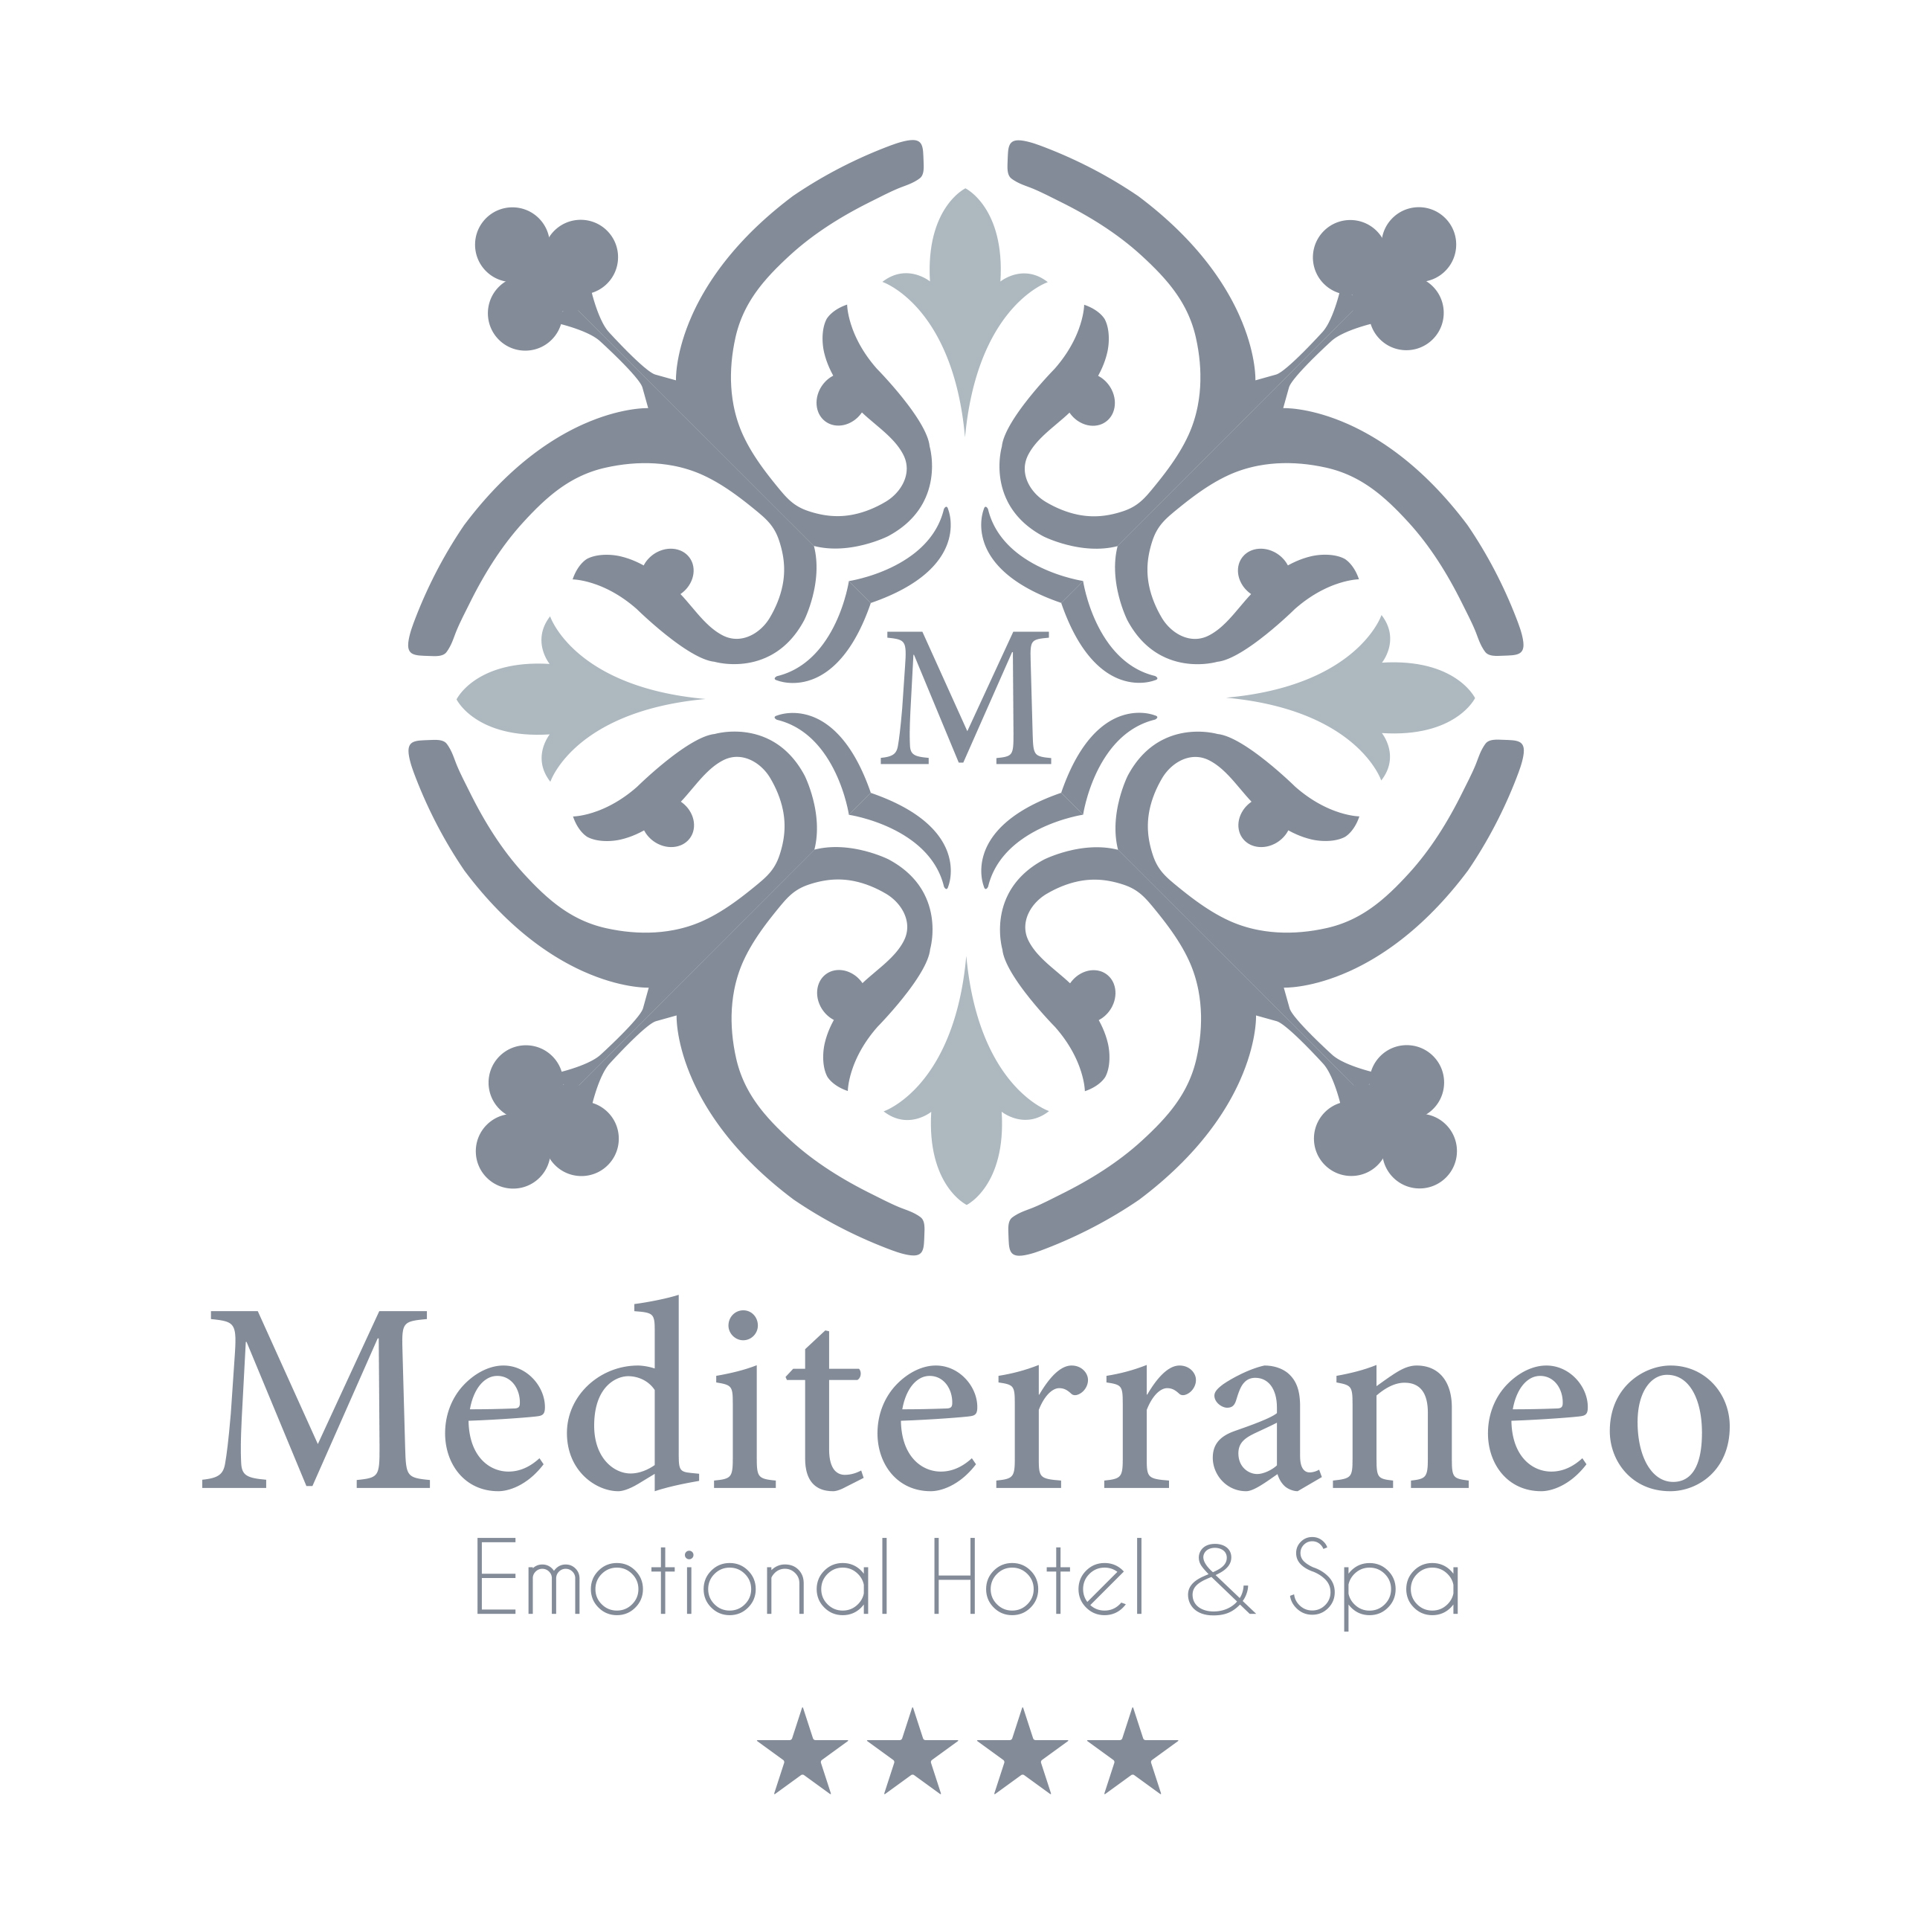 Mediterraneo Hotel & Spa